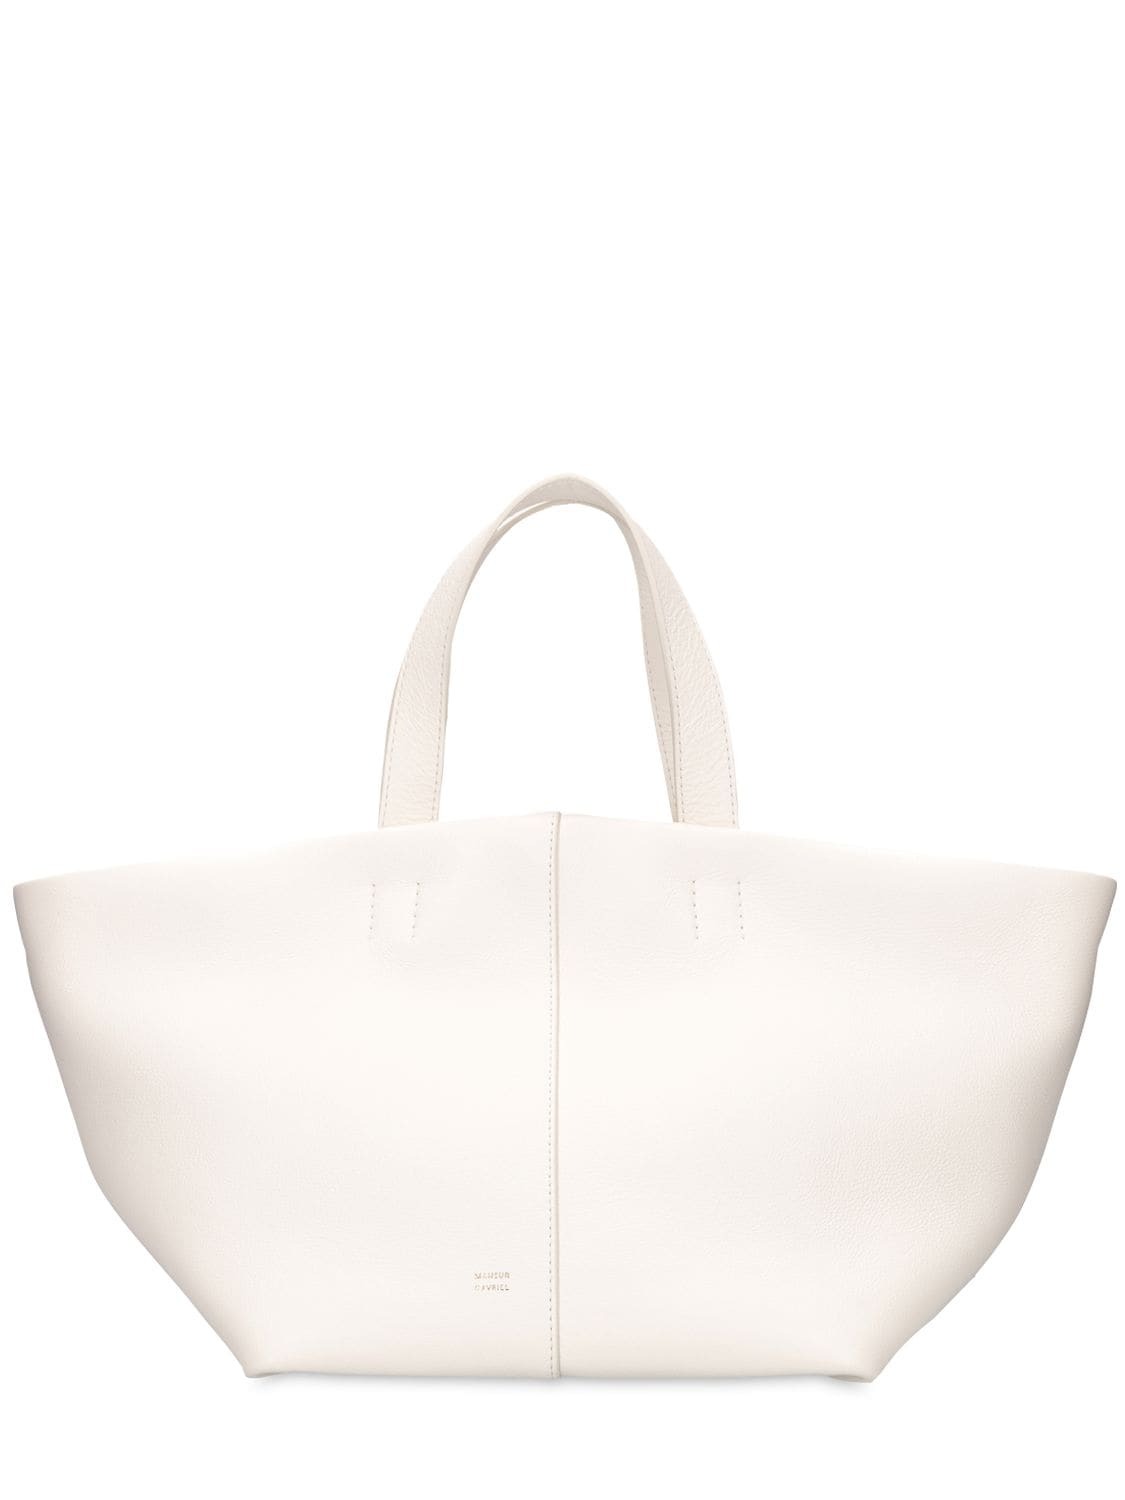 MANSUR GAVRIEL Tulipano Leather Top Handle Bag in white